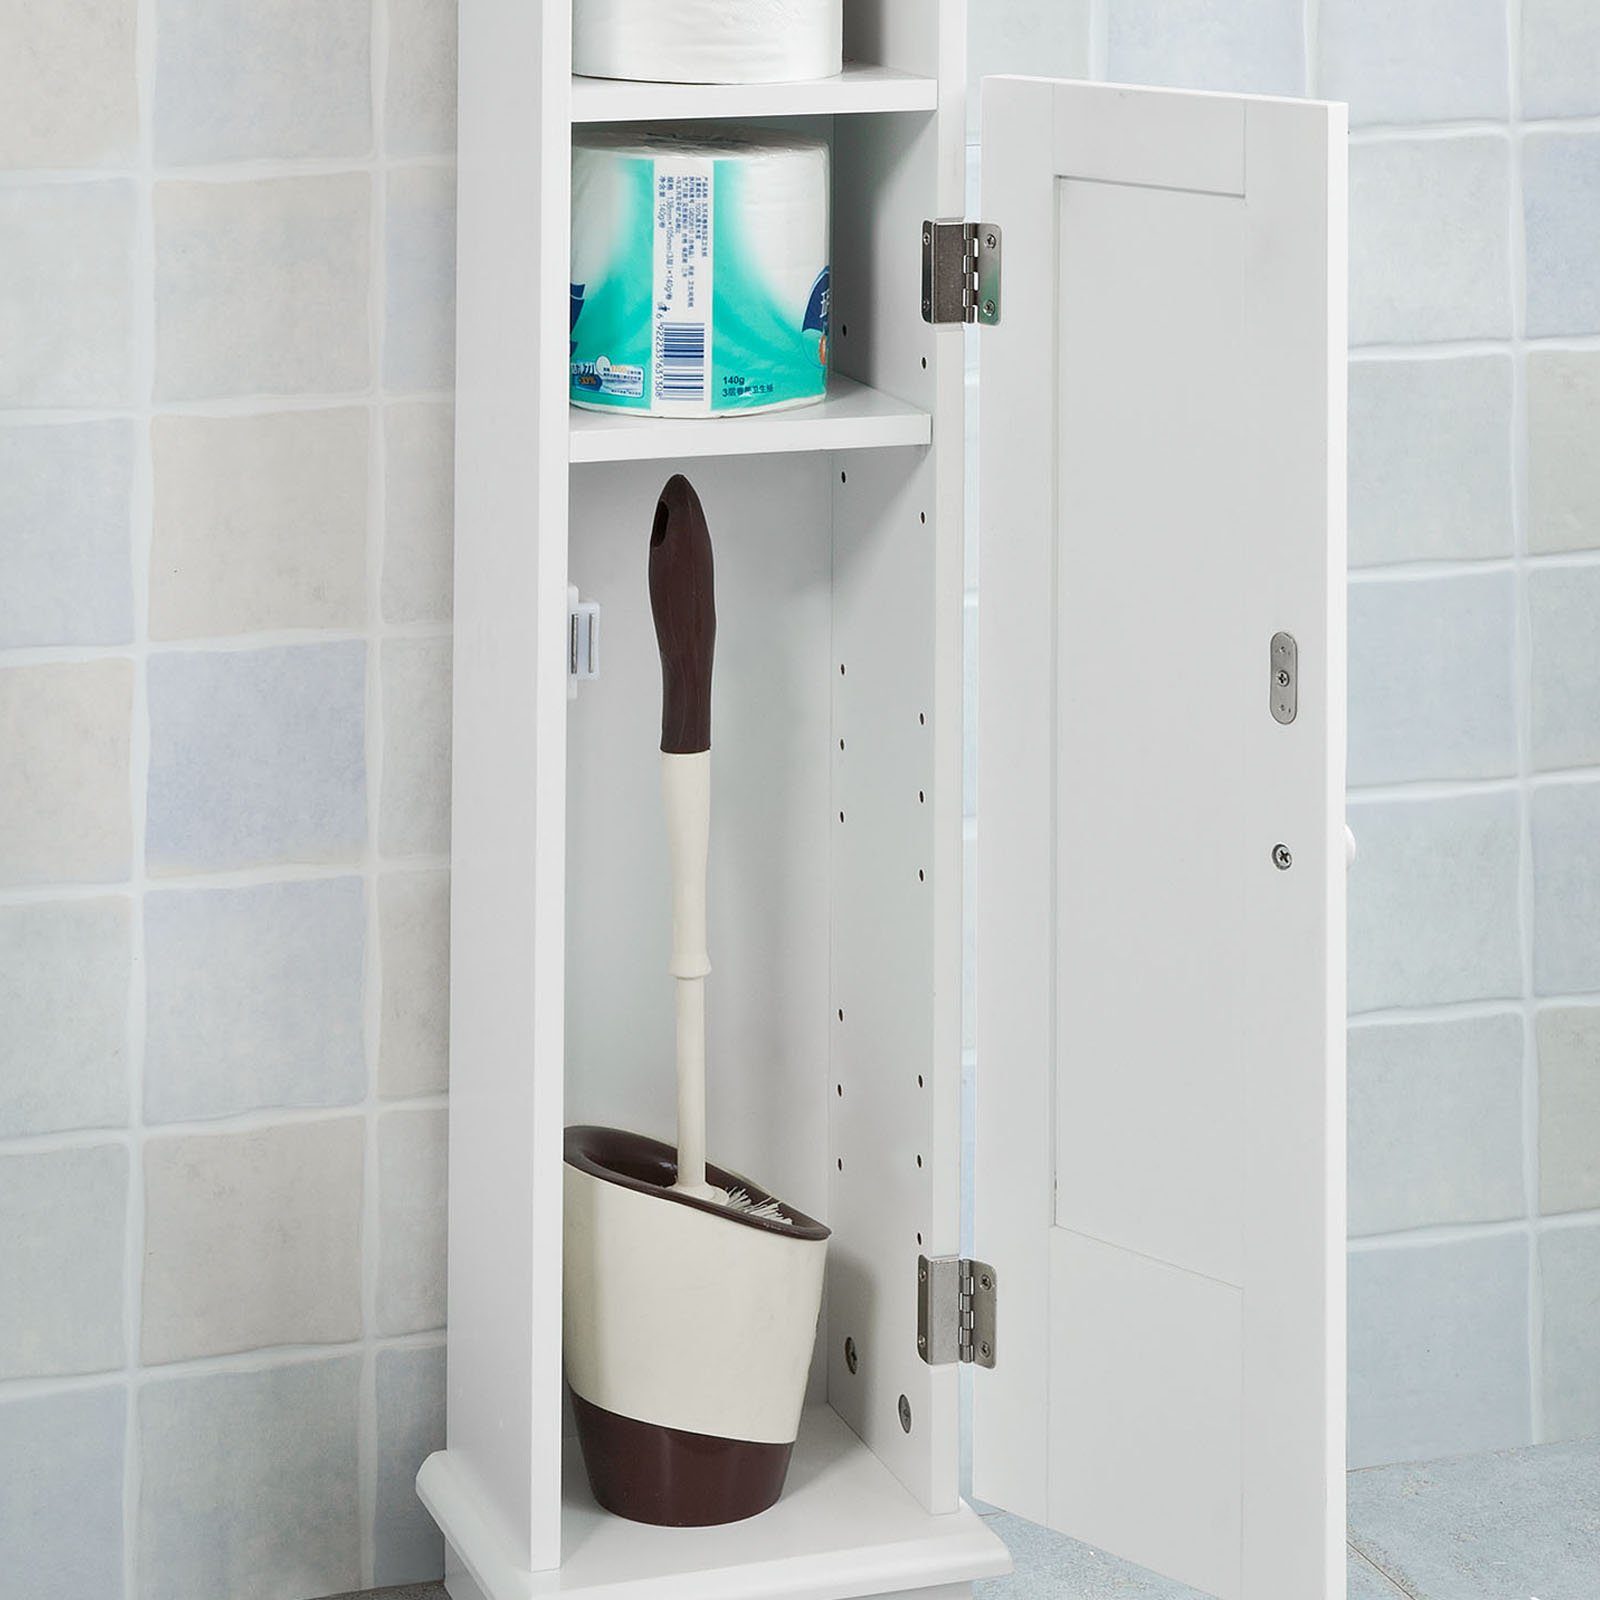 SoBuy Toilettenpapierhalter FRG135/FRG177, Toilettenrollenhalter Toilettenpapieraufbewahrung